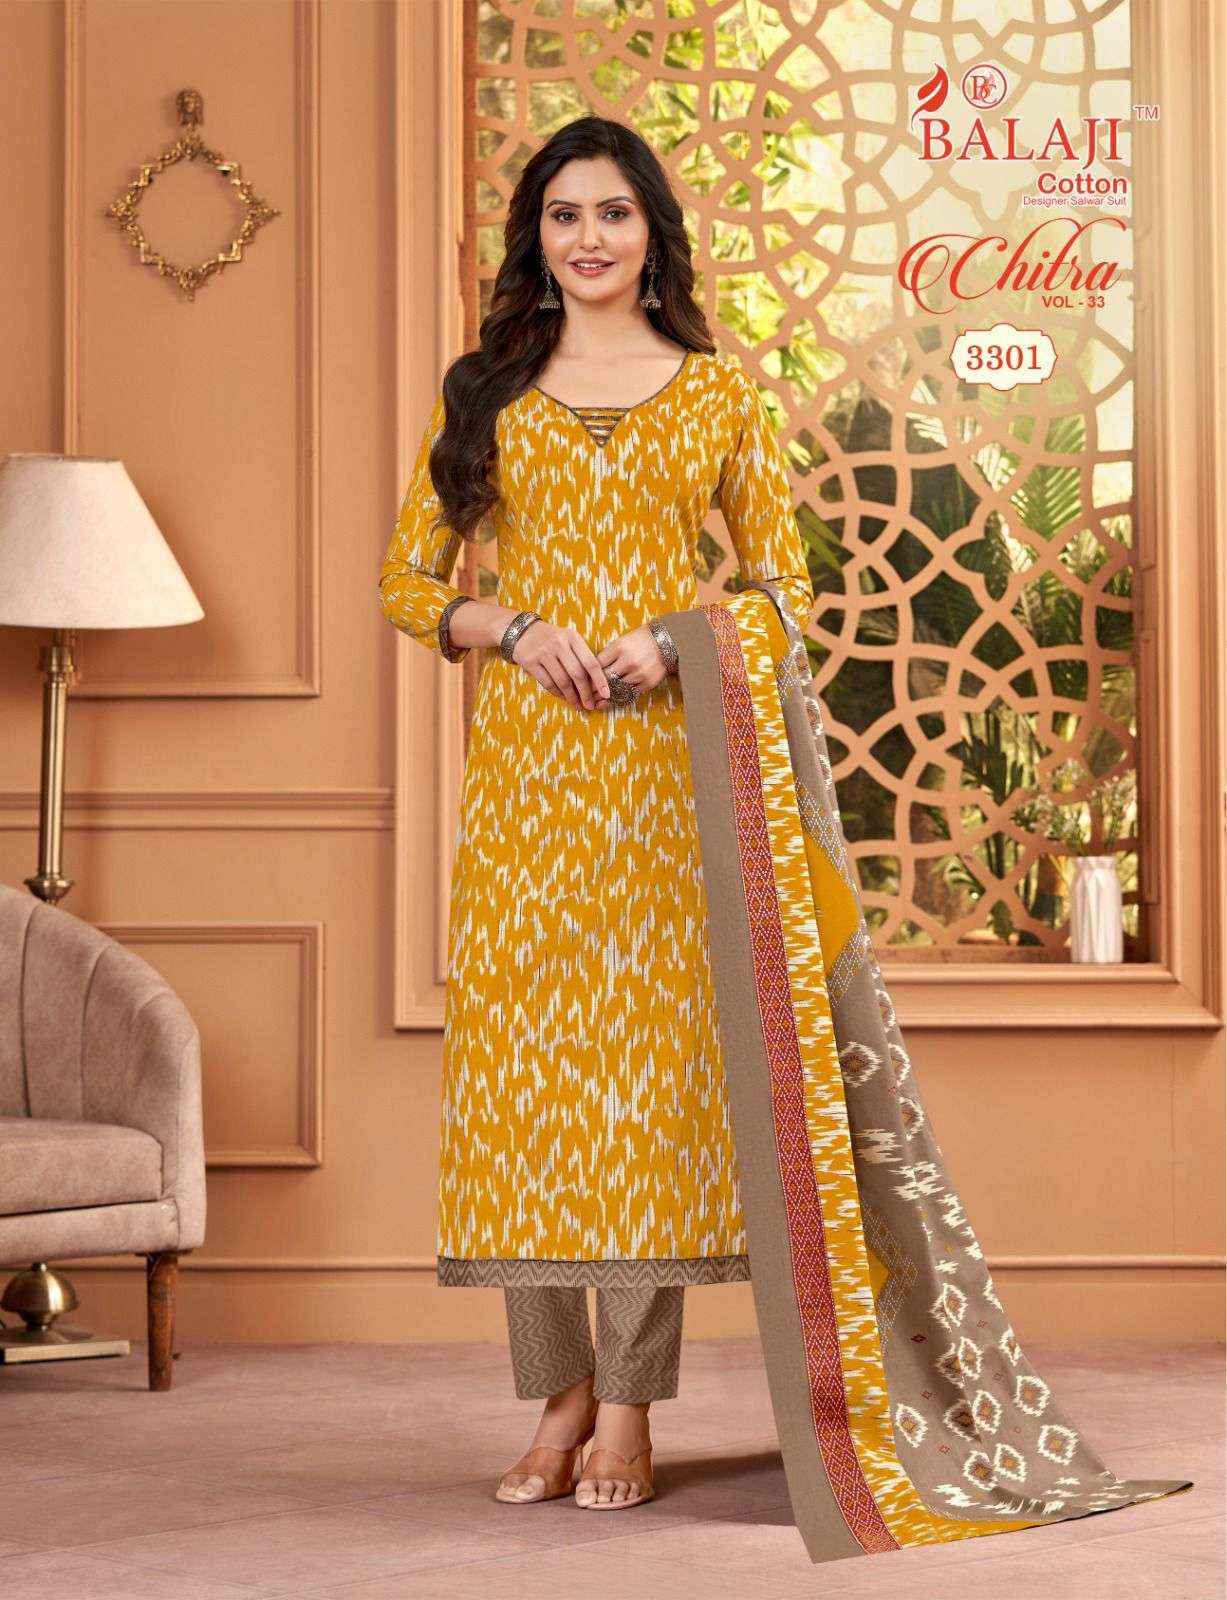 Balaji Chitra Vol-33 Cotton Dress Material (12 pcs Catalogue)